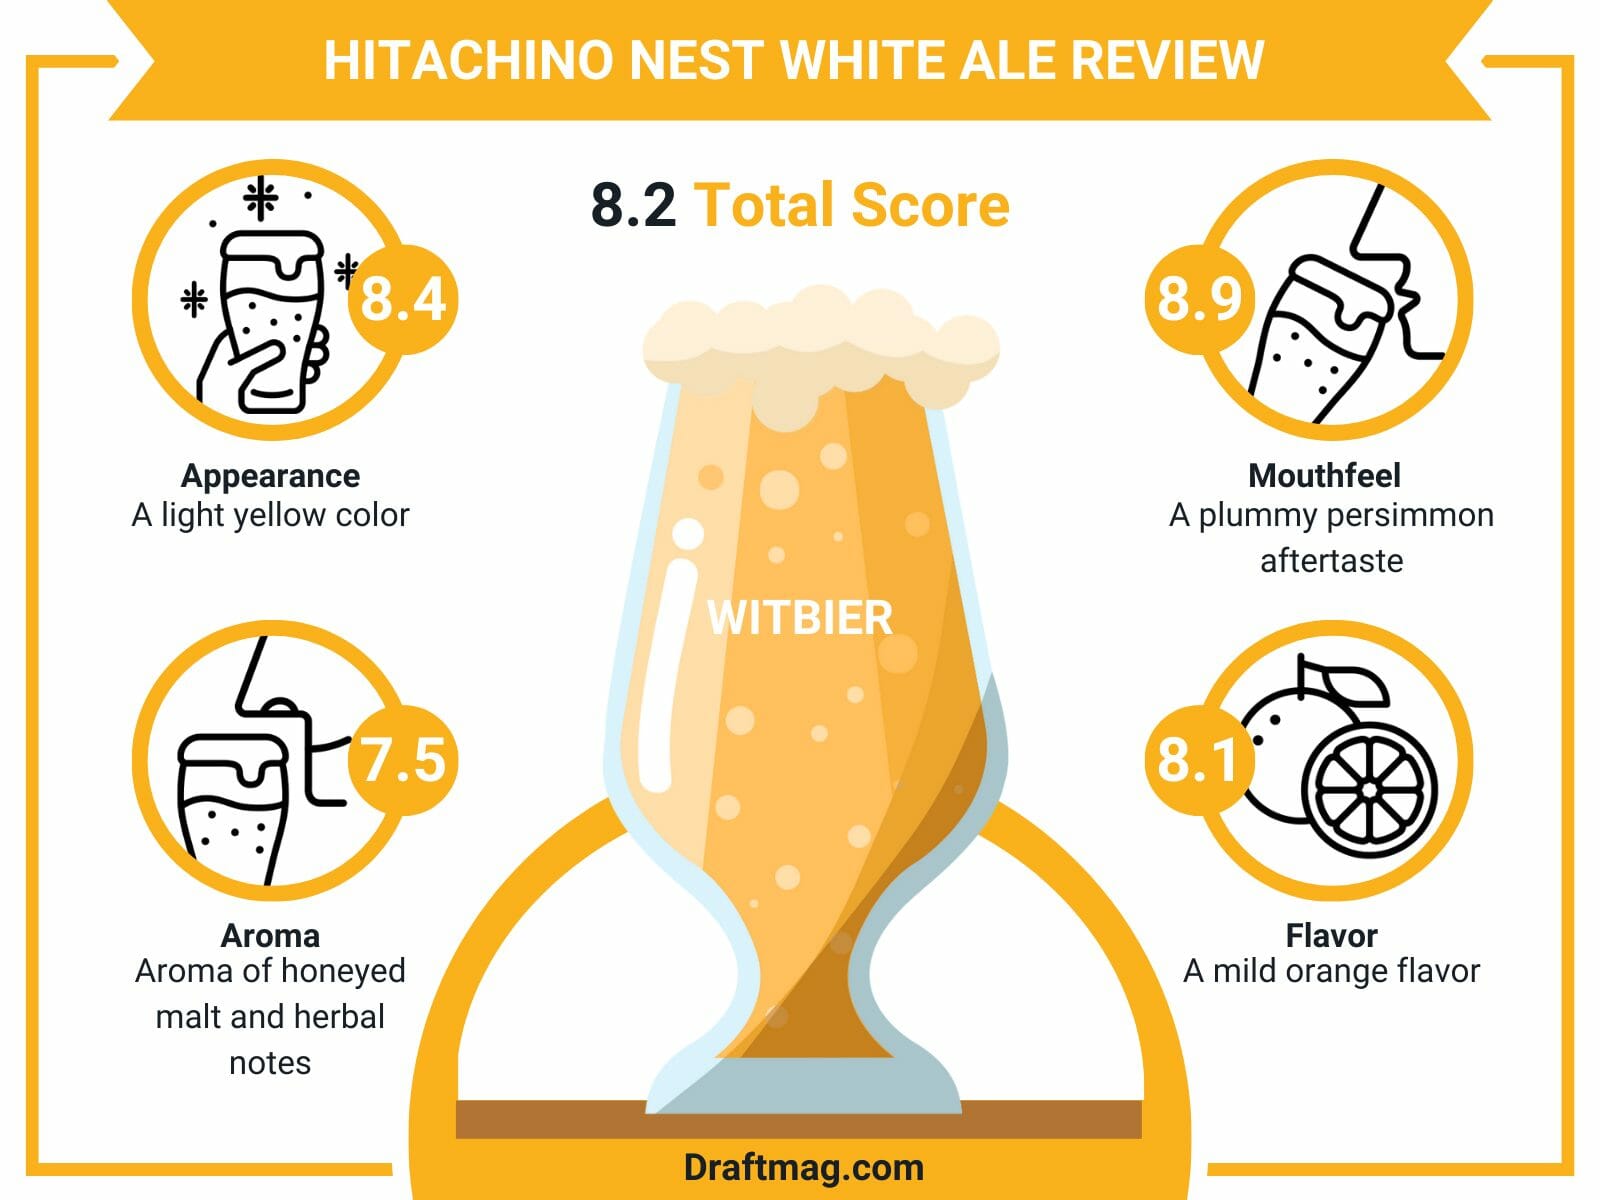 Hitachino nest white review infographic